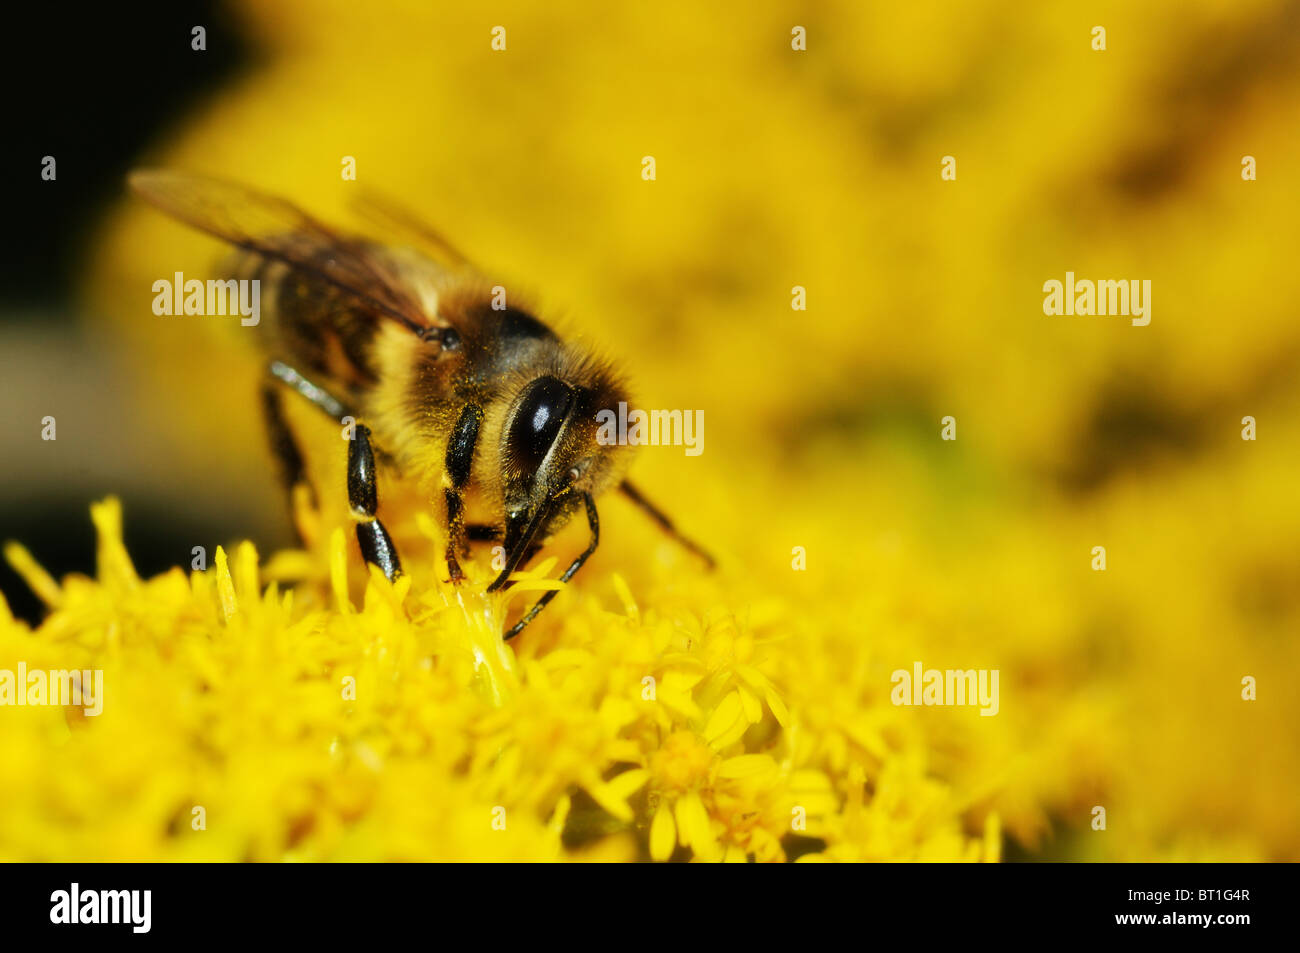 European Bee gathering honey on yellow flowers Stock Photo